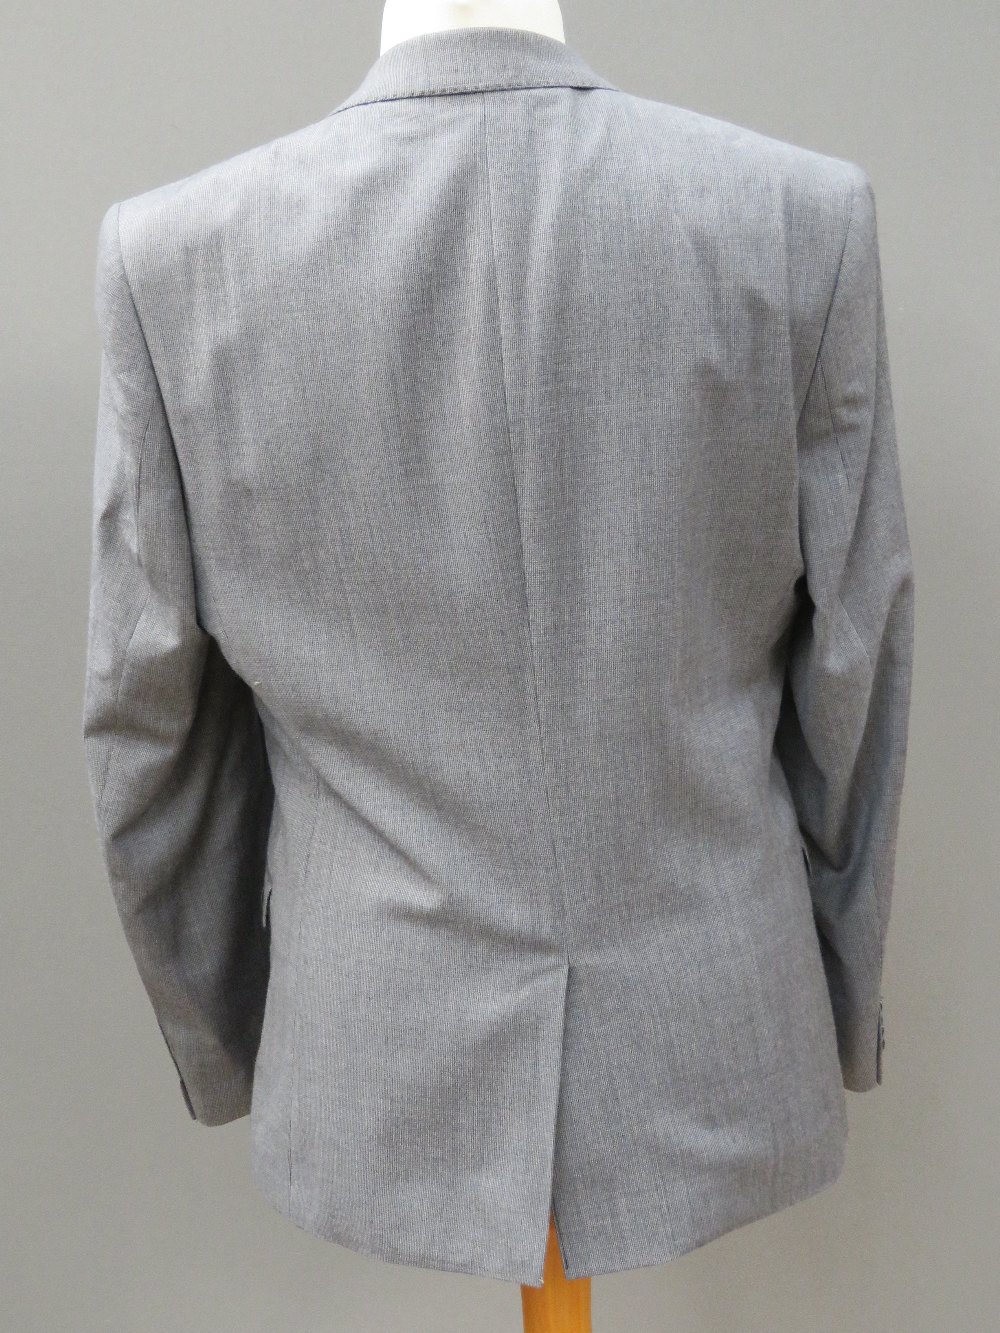 Ben Sherman men's suit jacket, 40" Regular. New with tags. - Image 2 of 4